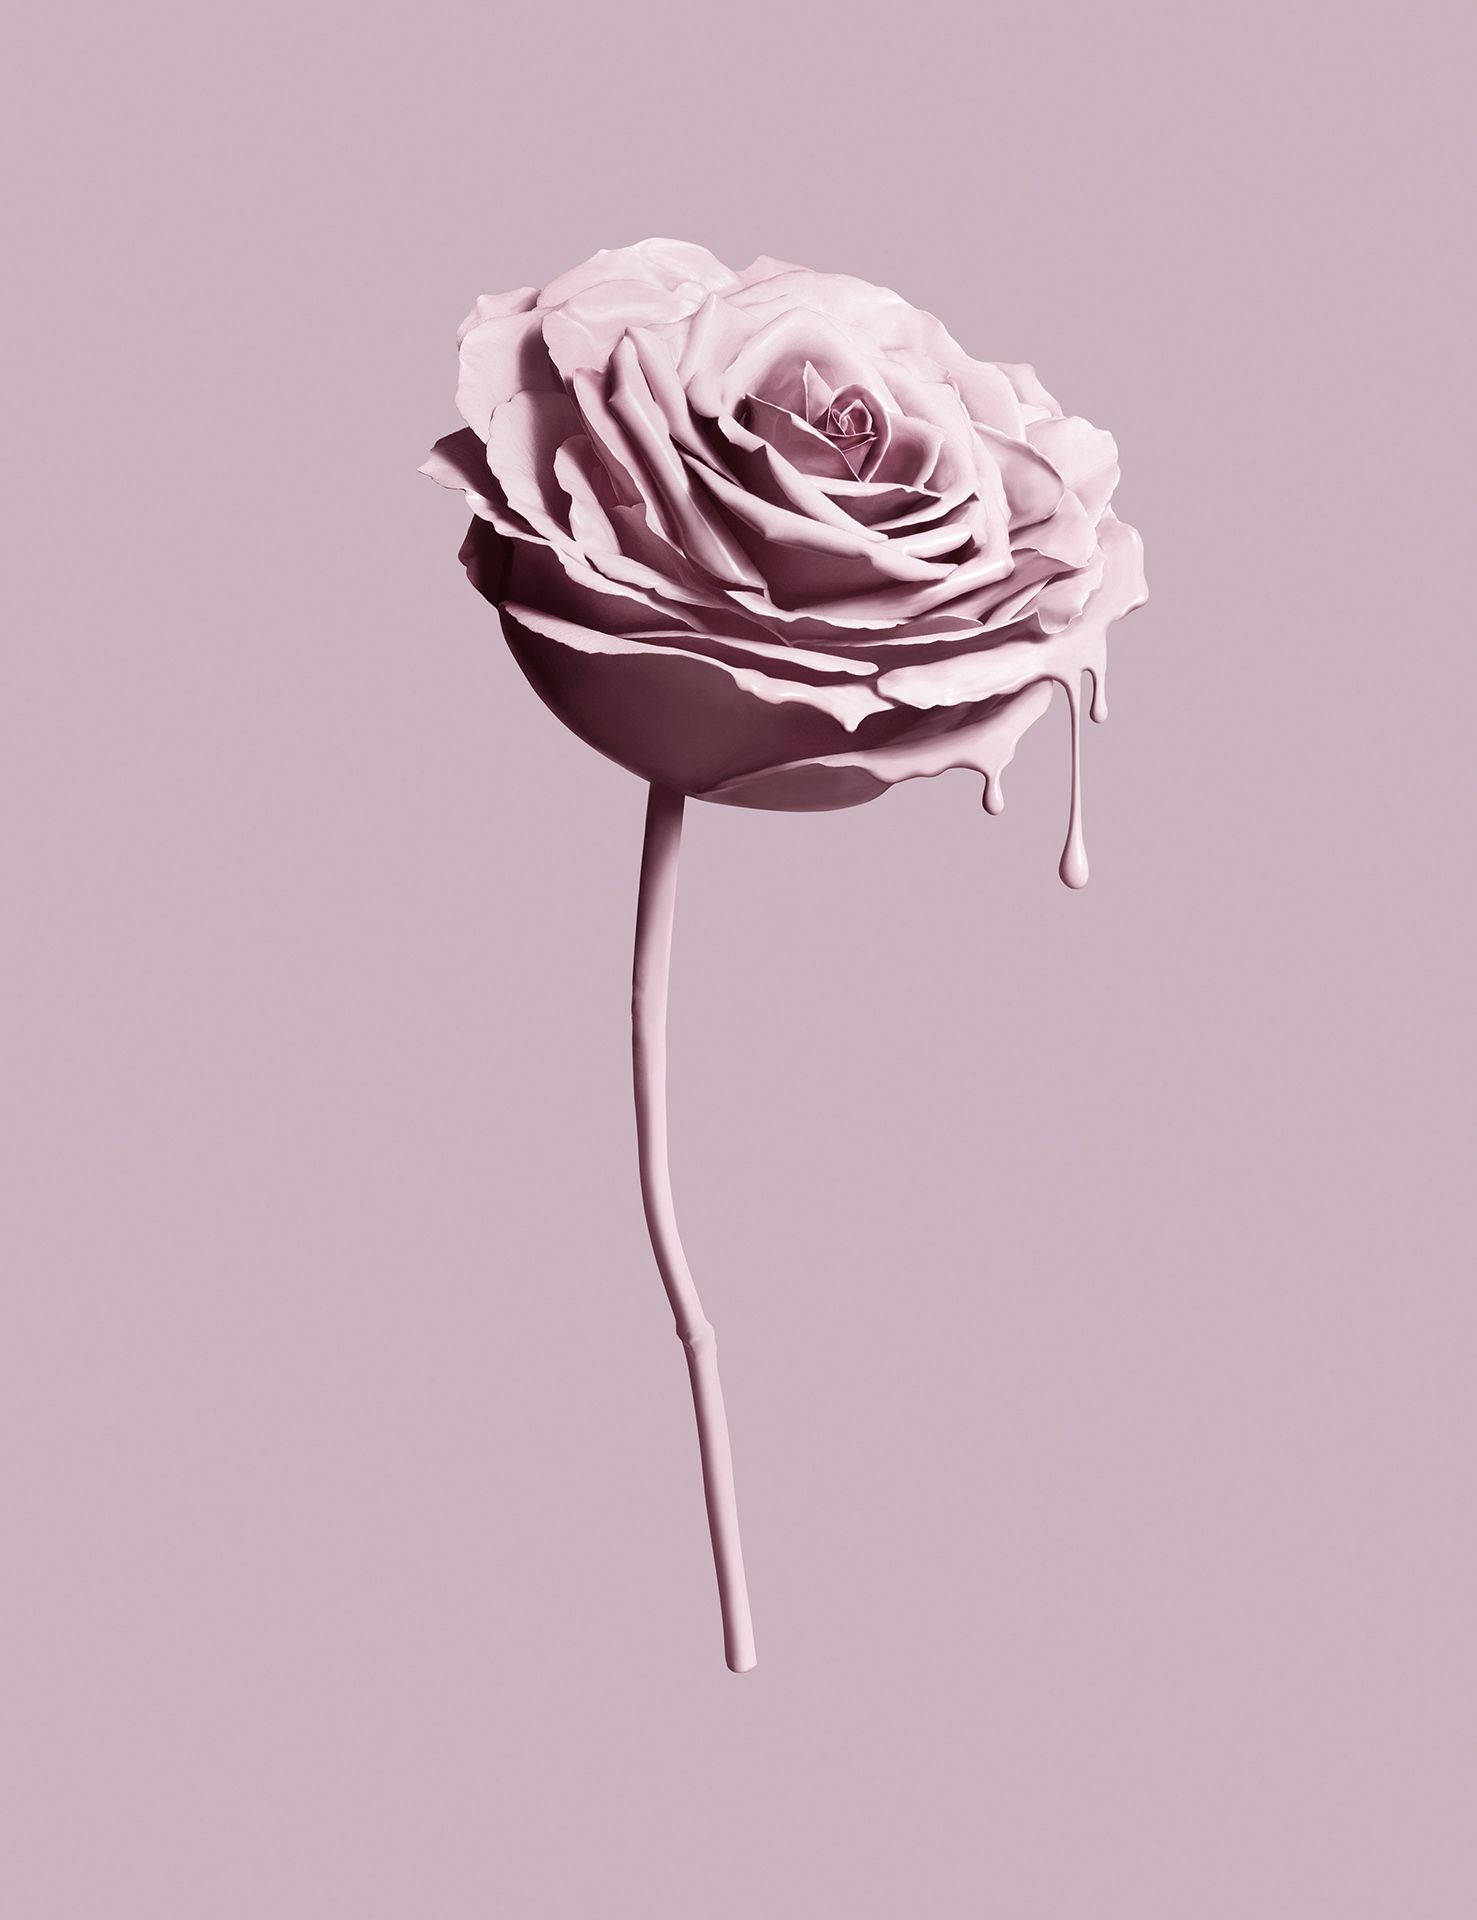 Pink Rose Tumblr Aesthetic Wallpaper